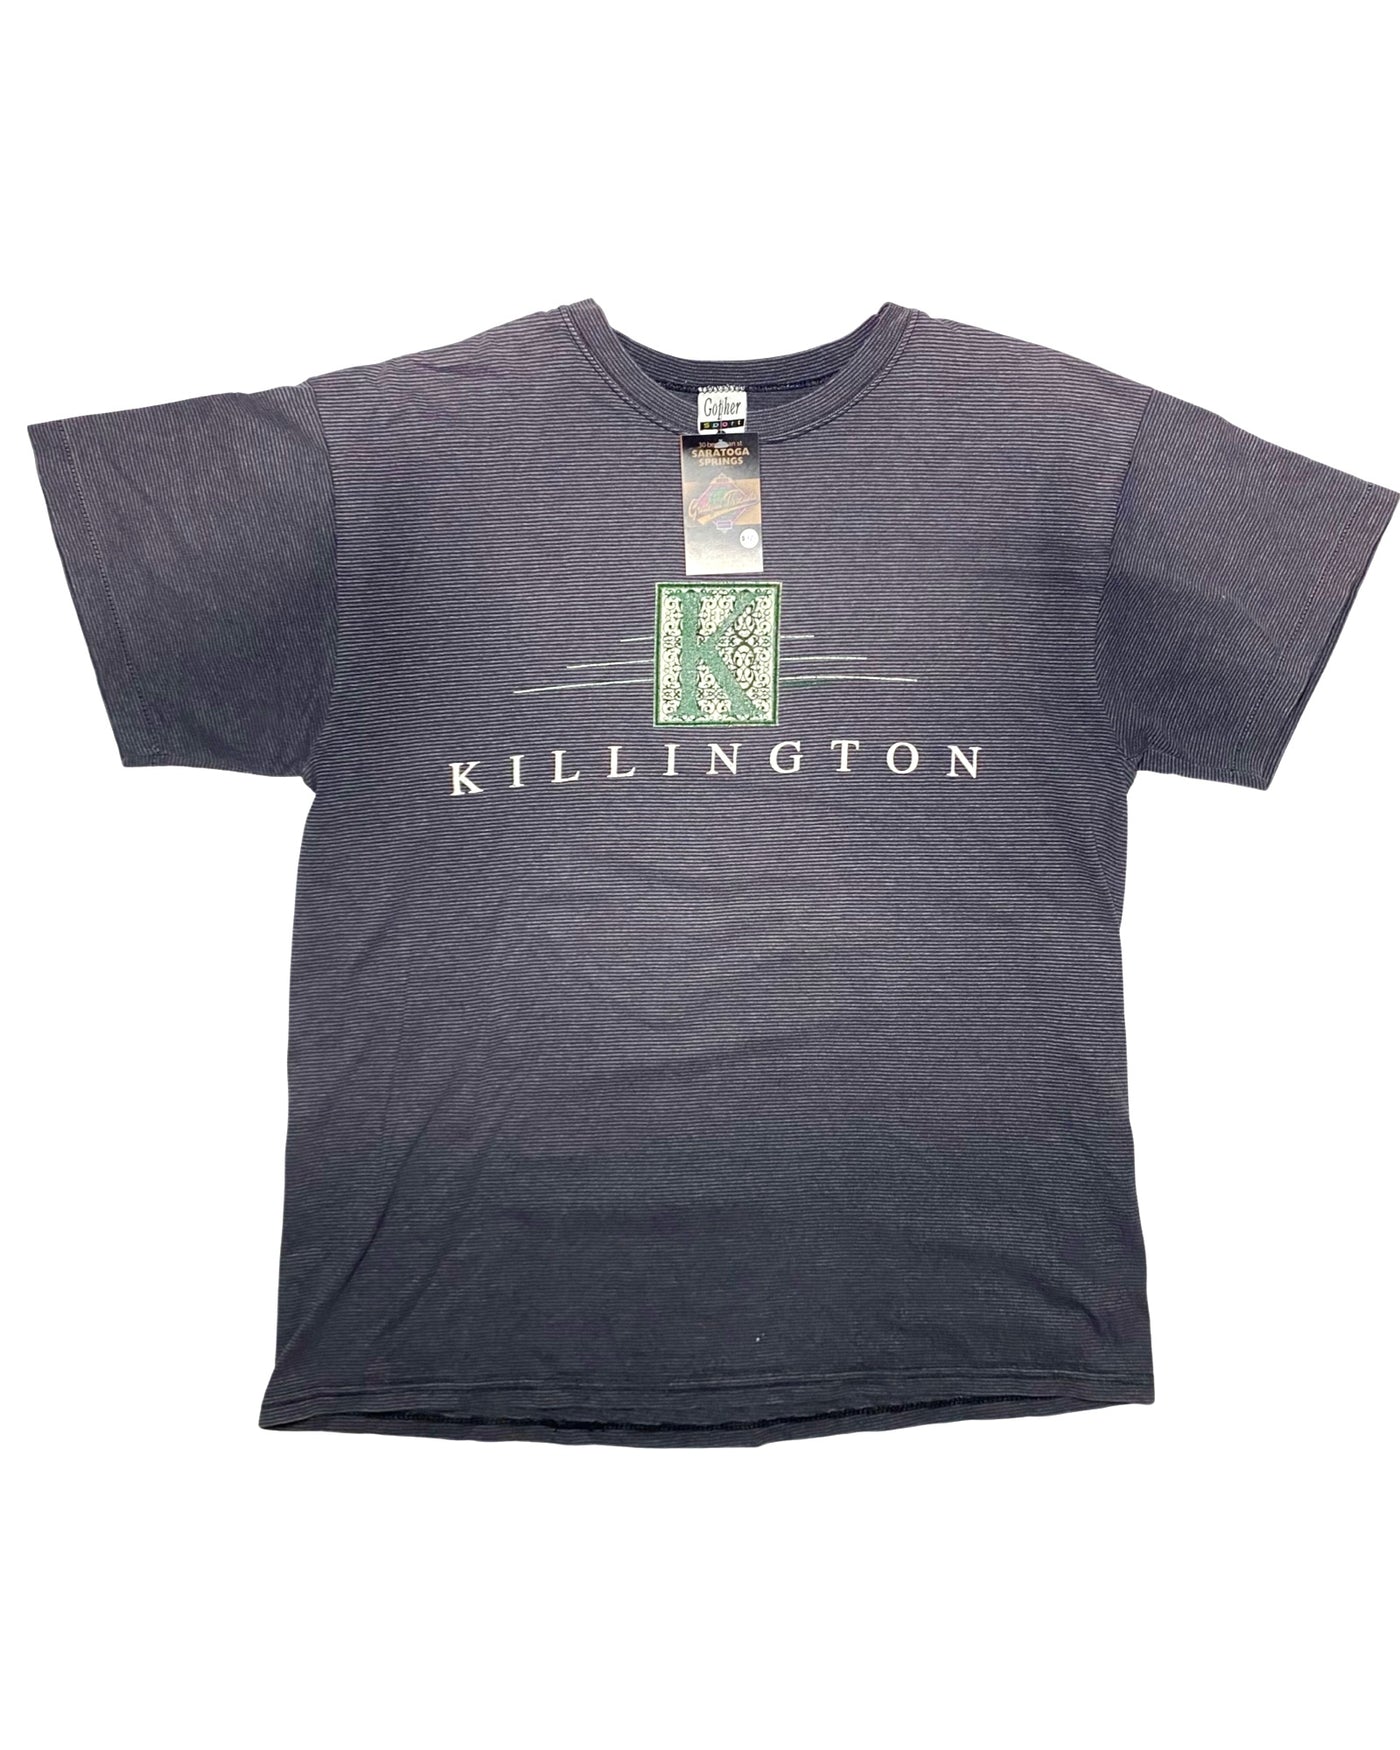 Vintage 90s Killington Vermont T-Shirt